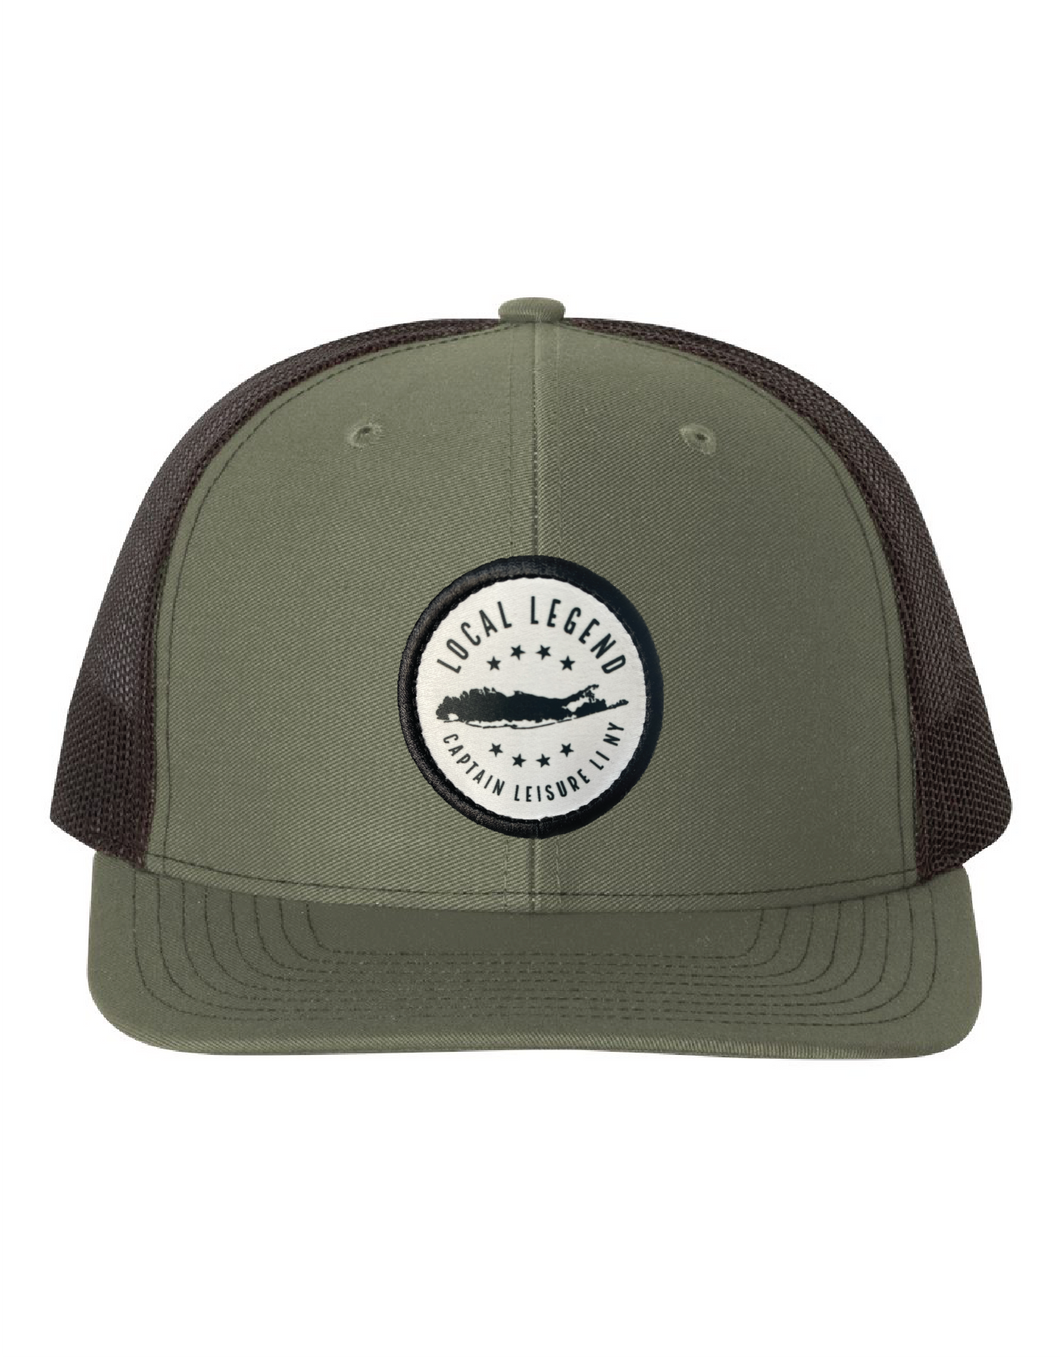 Local Legend Patch Logo Mesh SnapBack Hat - Army Green/Black